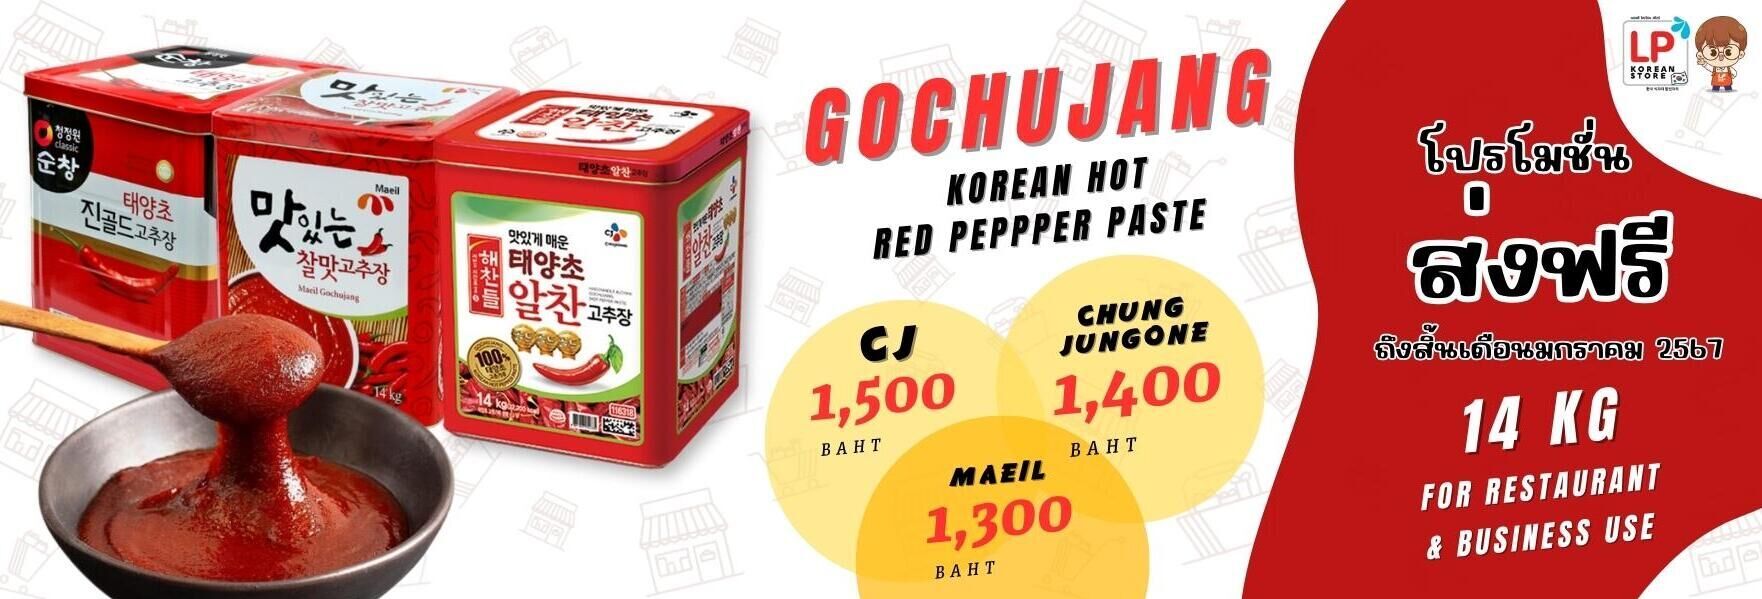 Korean Hot Red Pepper Paste Gochujang